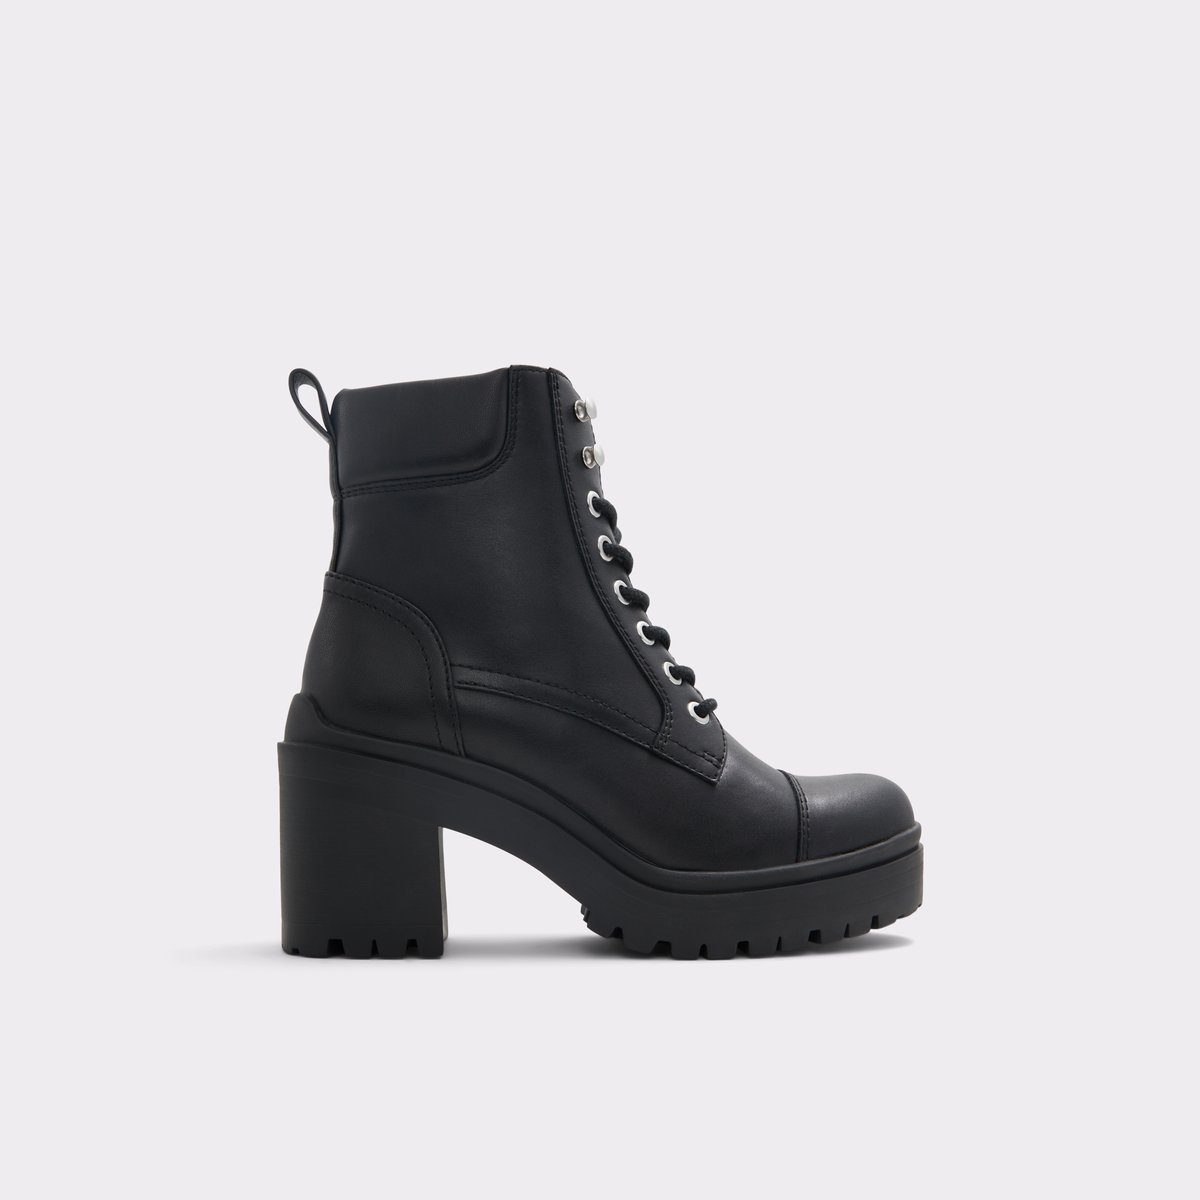 Alique Black Leather Smooth Women's Winter boots | ALDO Canada